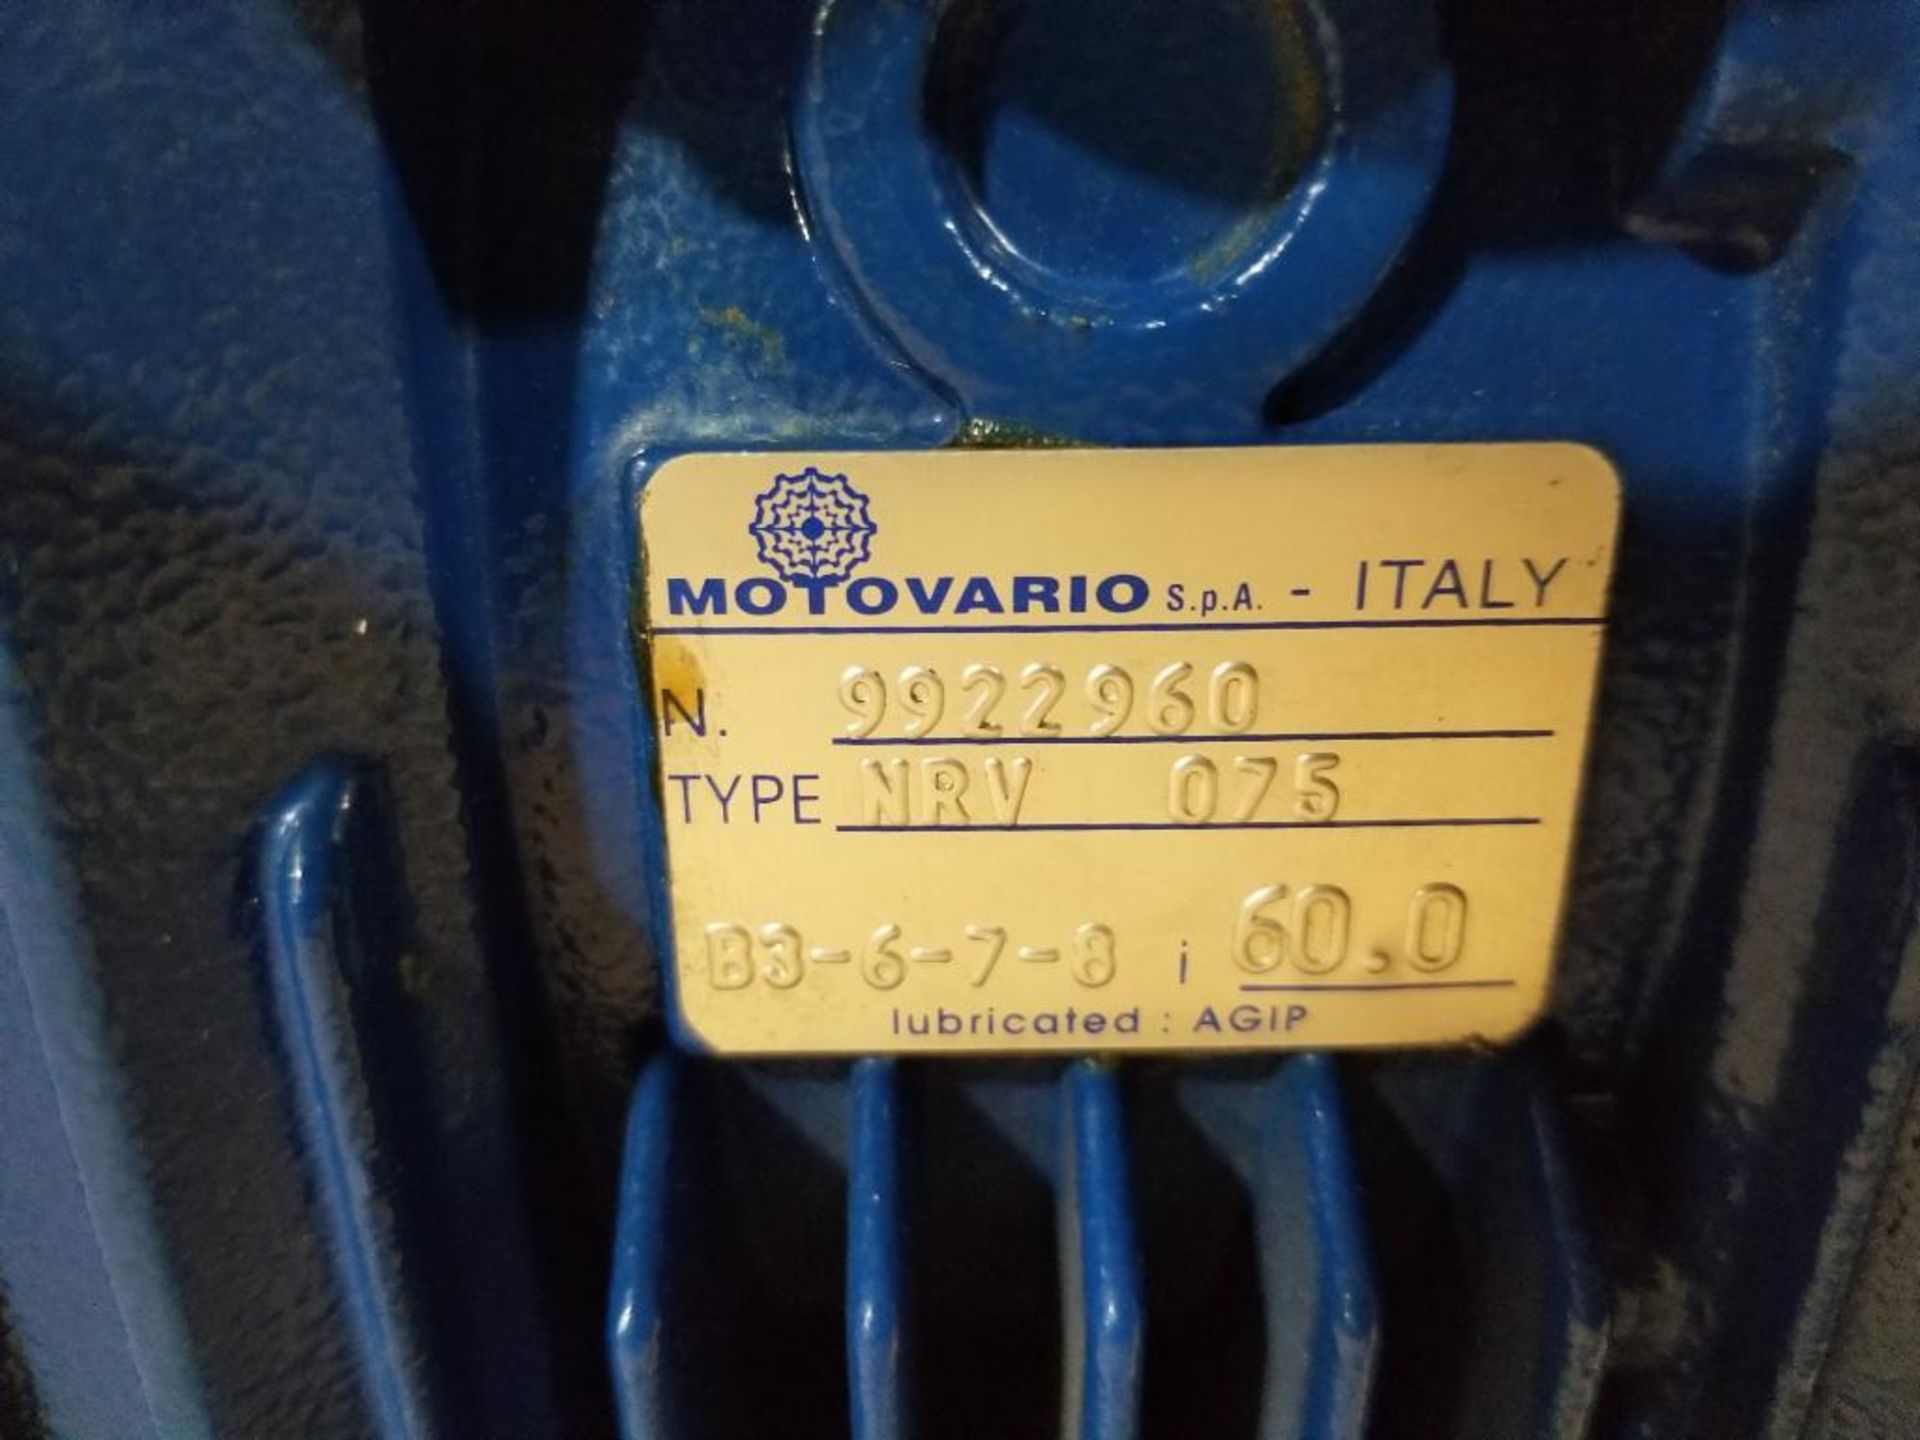 Motovario gearbox. Model NRV-075. 60:1 ratio. - Image 2 of 3